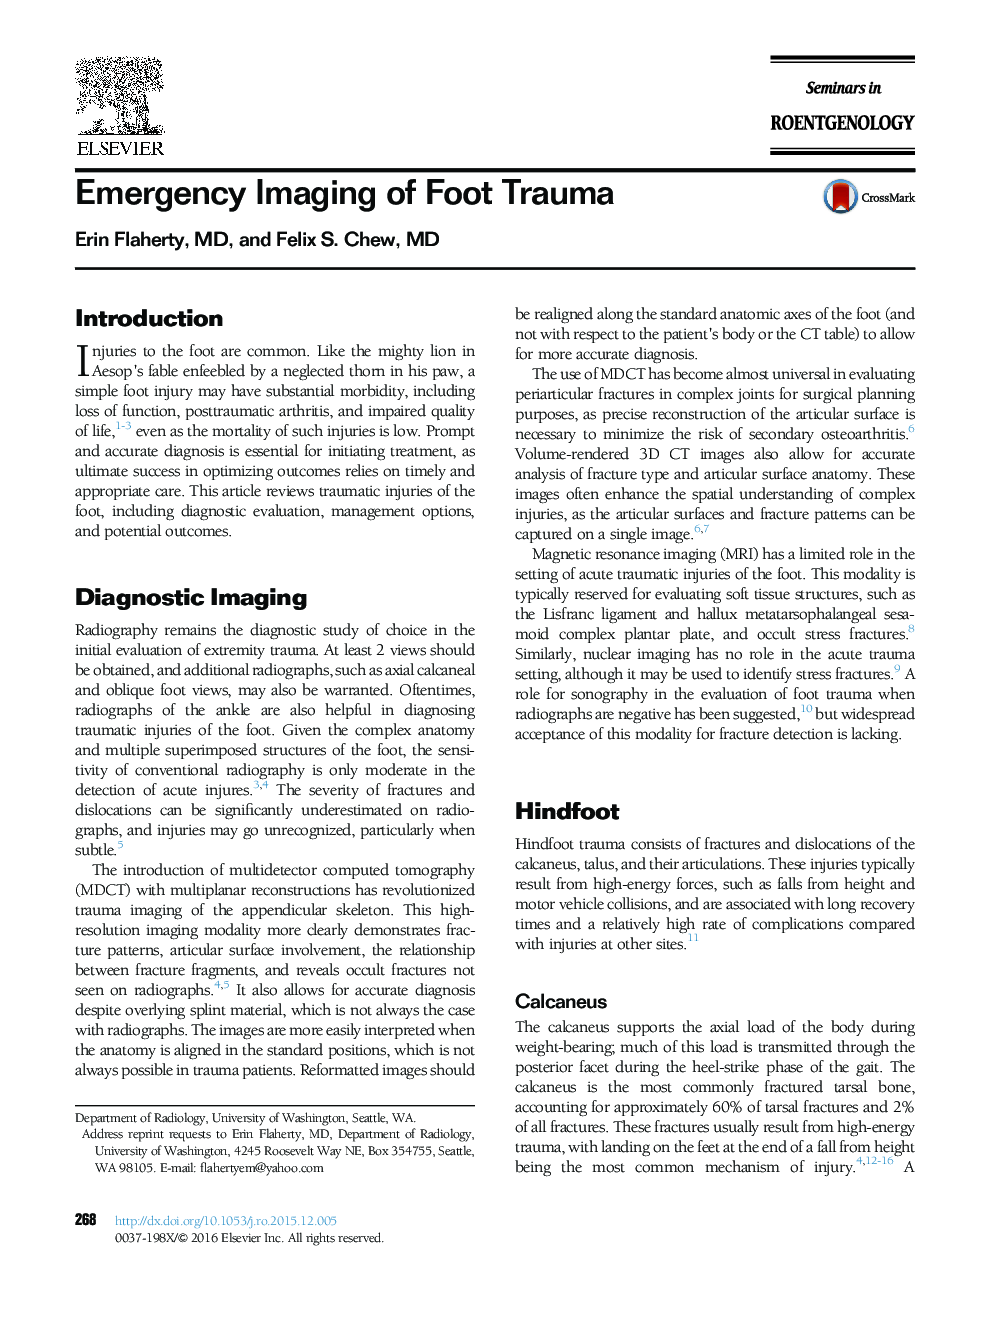 Emergency Imaging of Foot Trauma